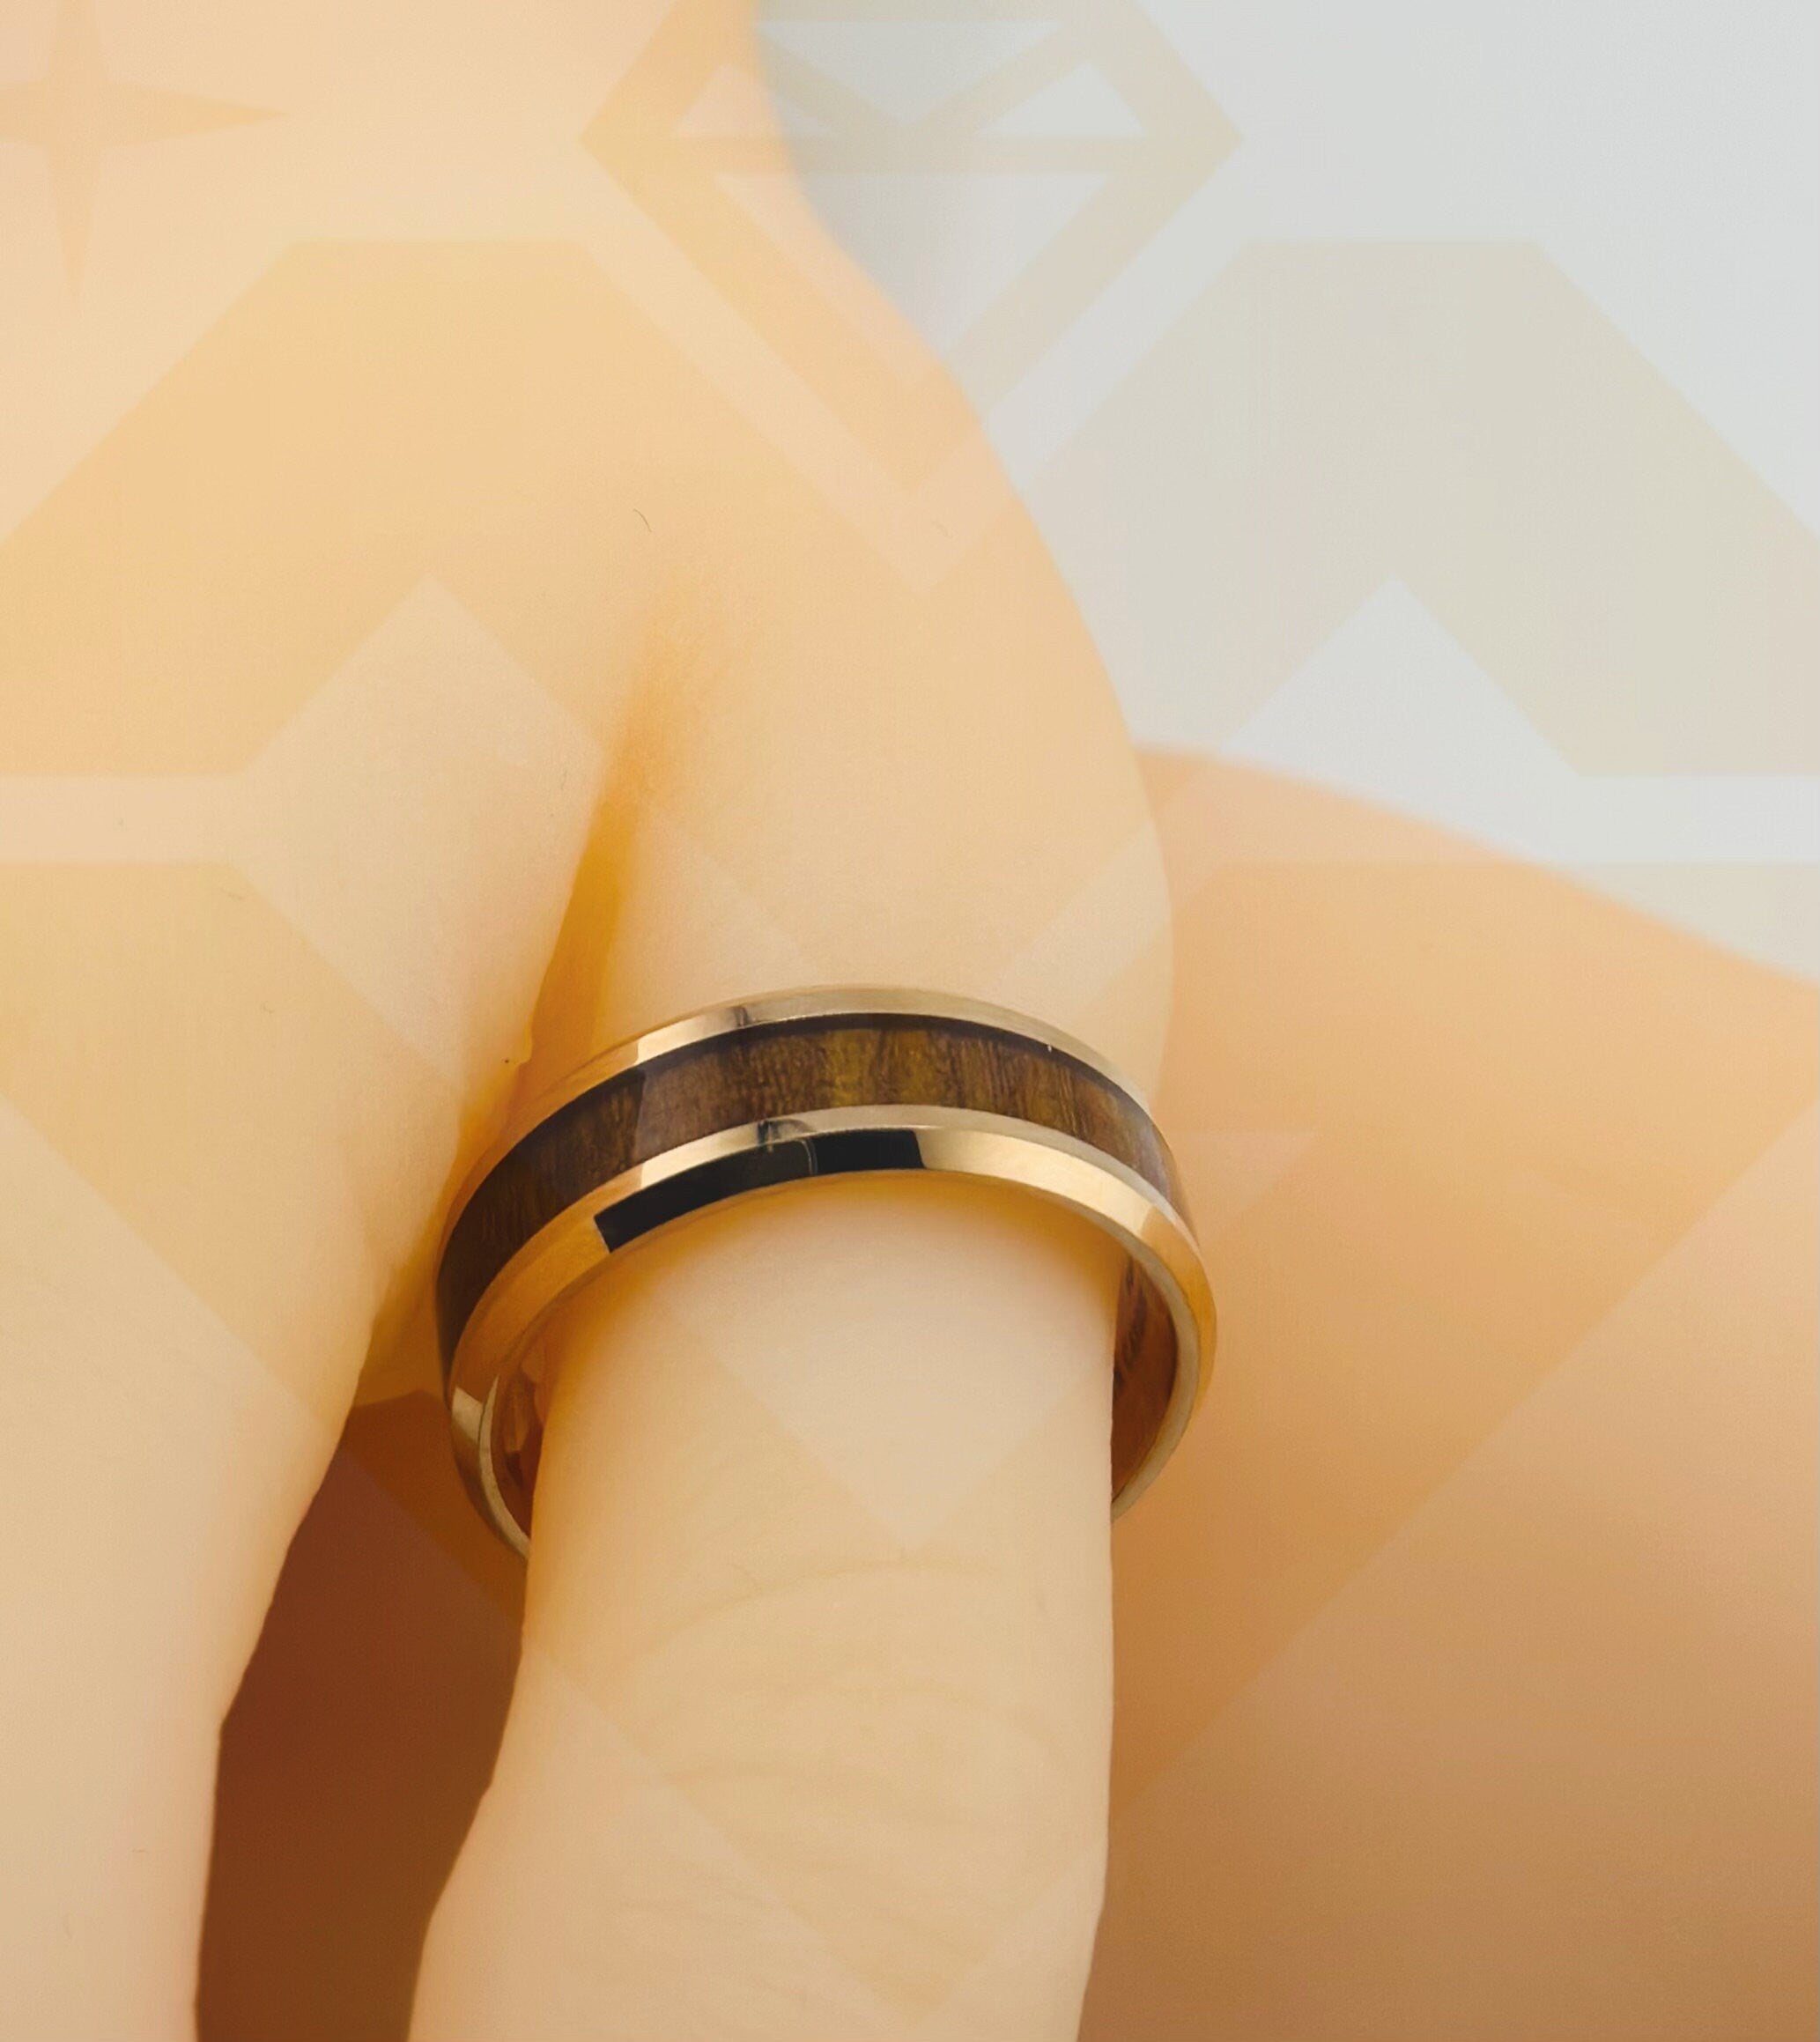 Stunning 14k Gold Vermeil Men's Wedding Band, Unique Tungsten Design - Eye of the Tiger, Wedding Band, Engagement Ring Men promise ring Sale